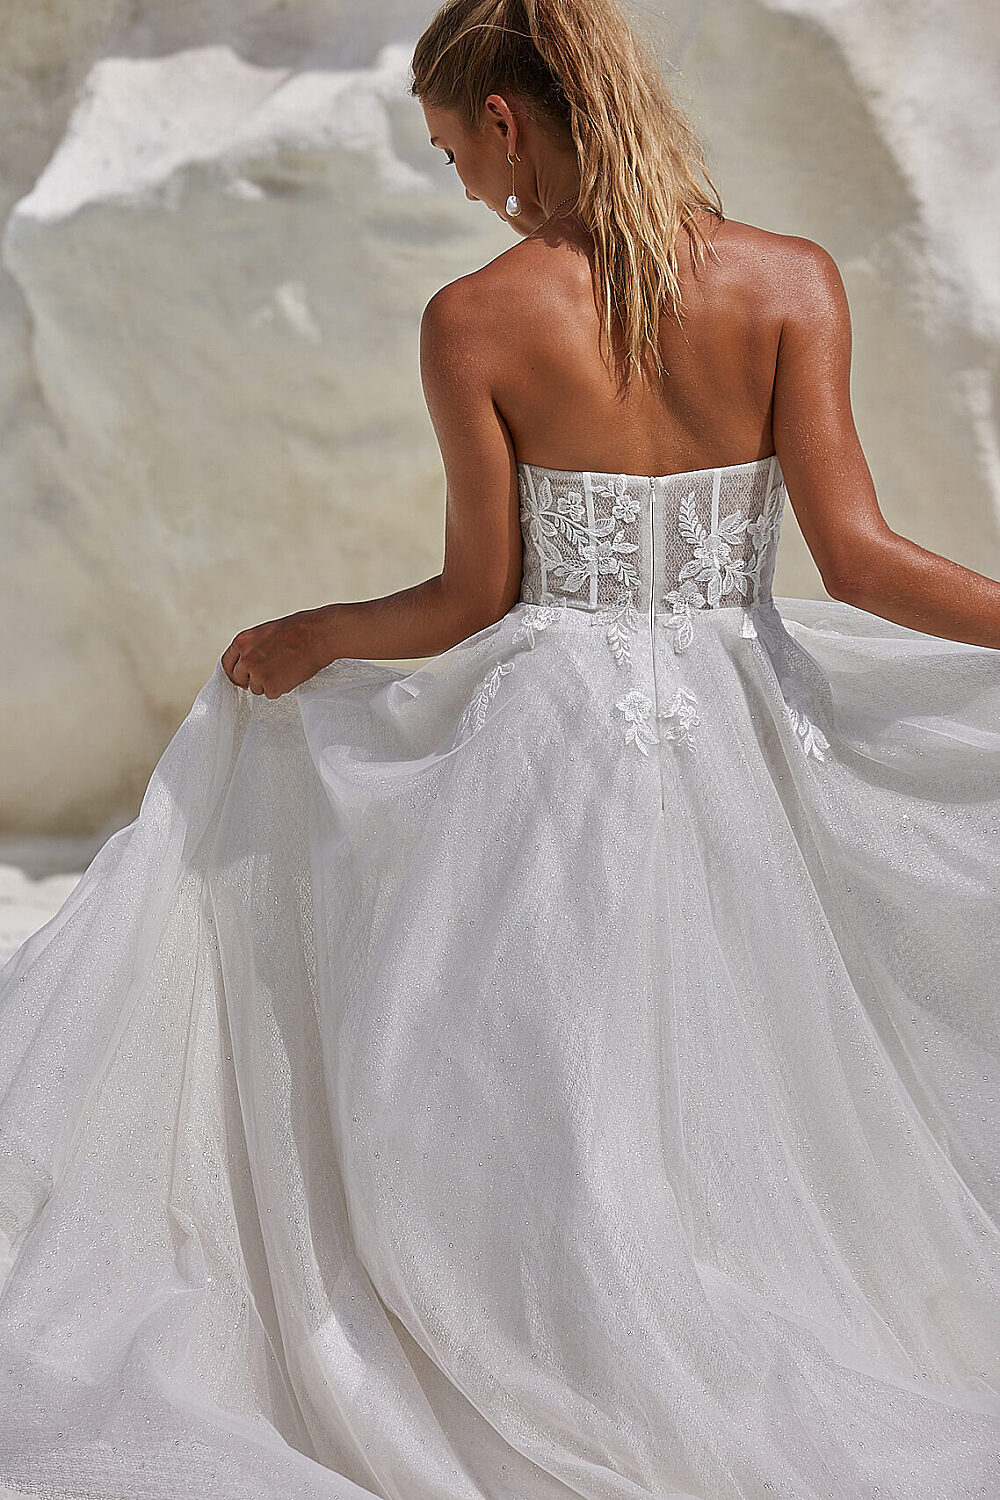 Lake TC2406 Tania Olsen Wedding Dress100A5579